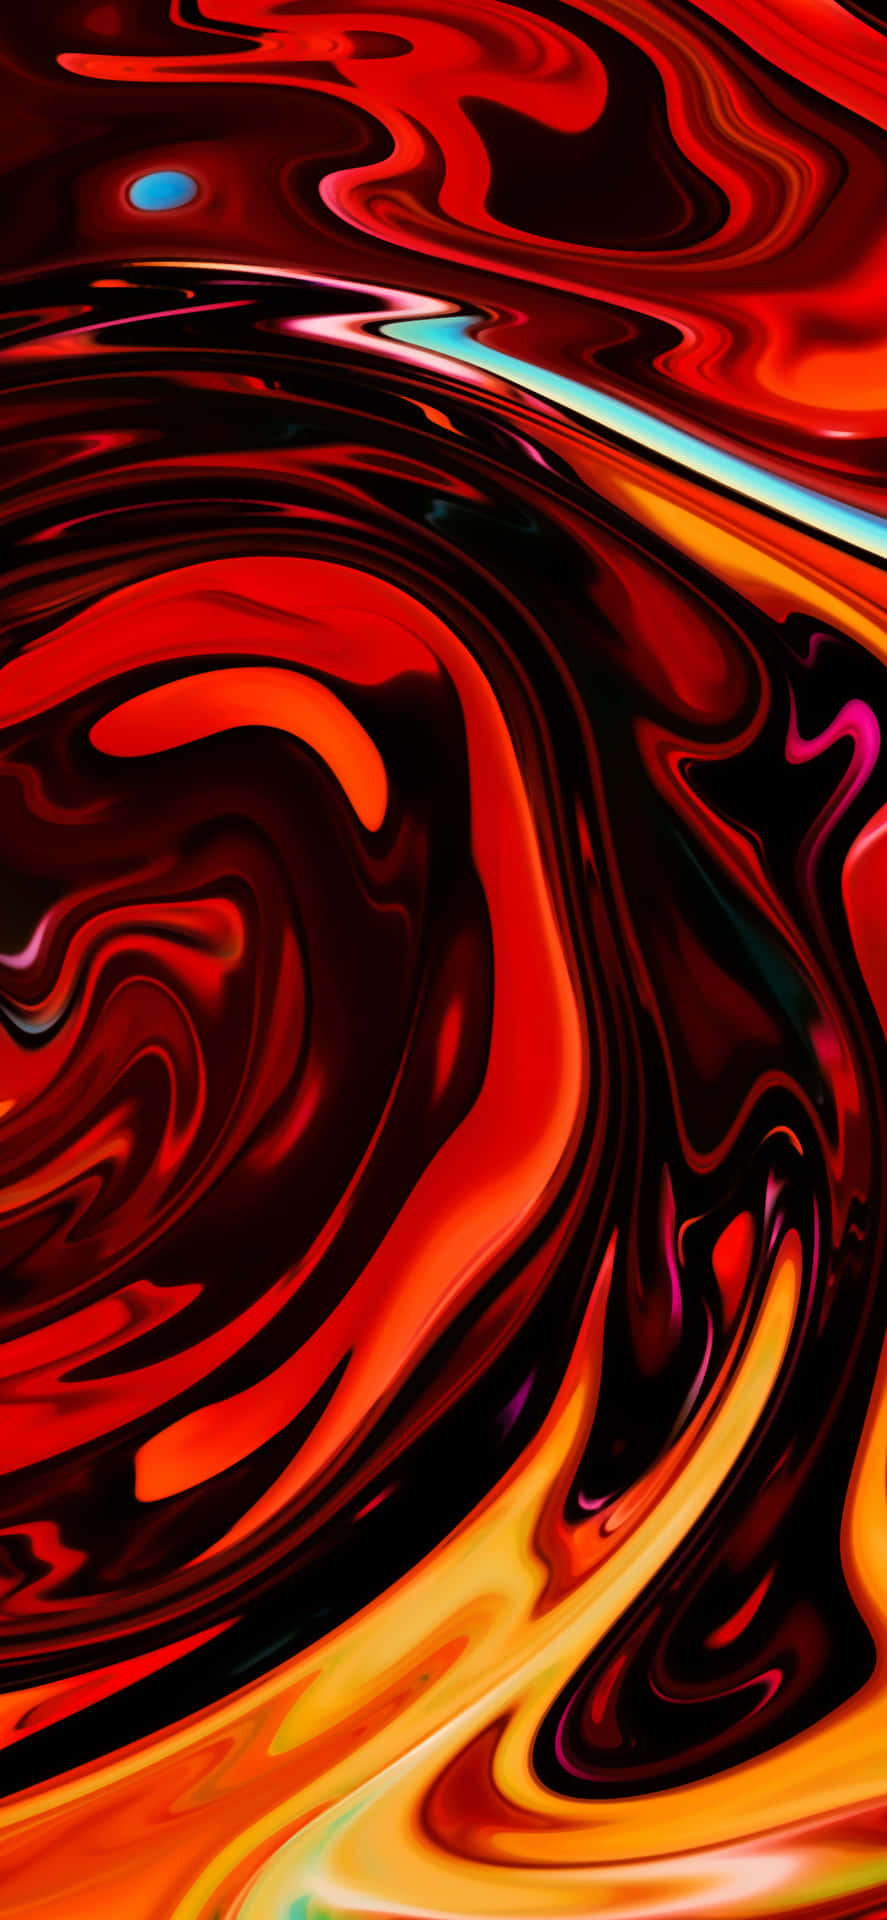 Orange Abstract Fluid Swirl Patterns Background